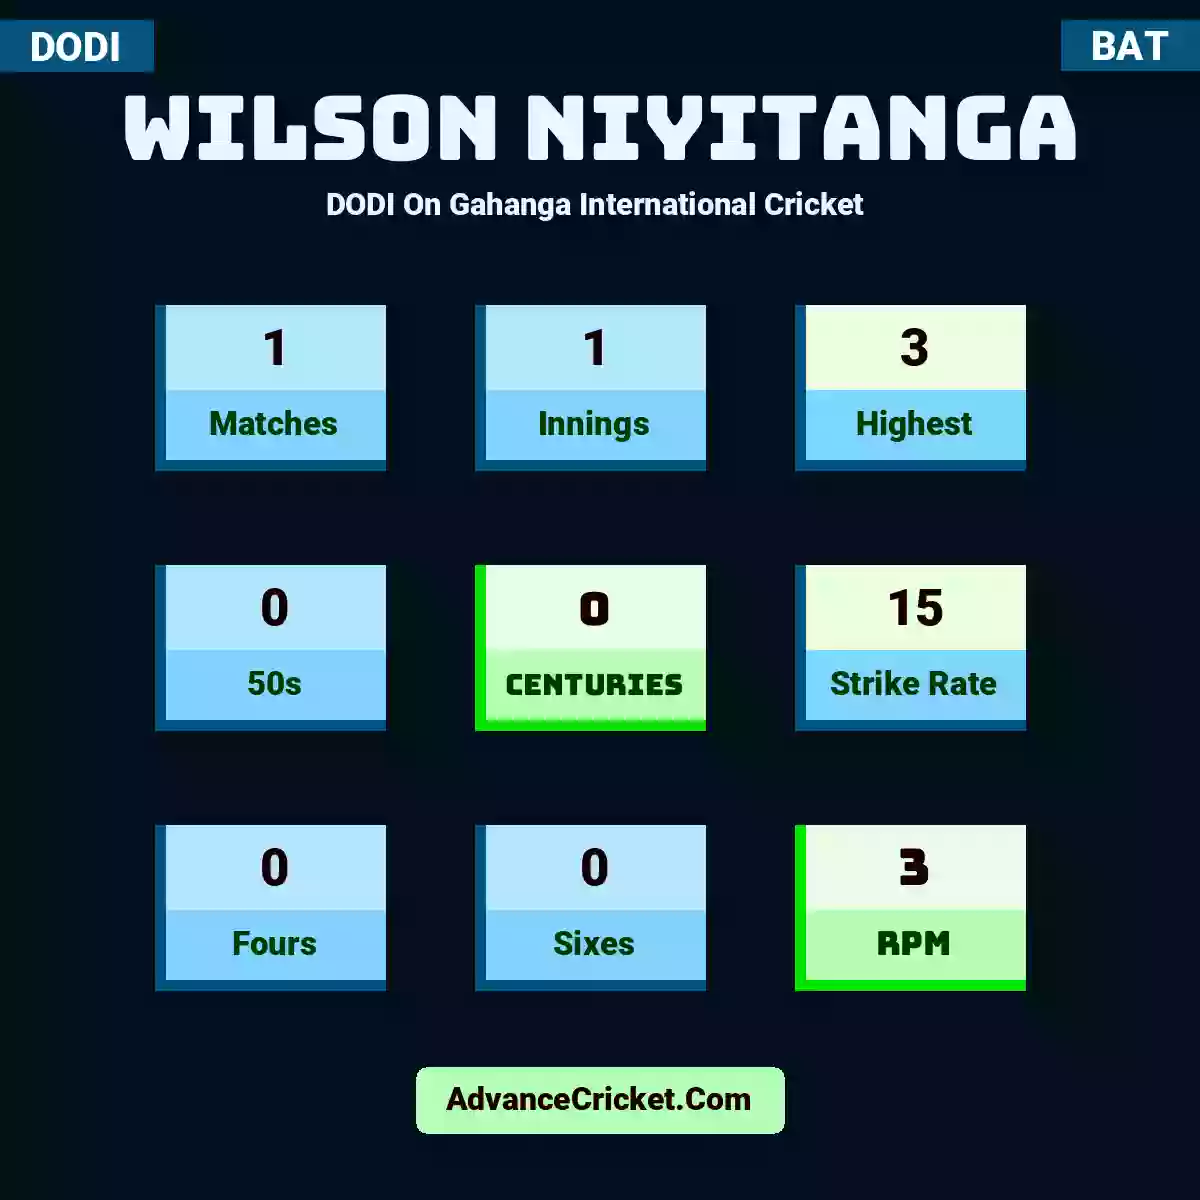 Wilson Niyitanga DODI  On Gahanga International Cricket , Wilson Niyitanga played 1 matches, scored 3 runs as highest, 0 half-centuries, and 0 centuries, with a strike rate of 15. W.Niyitanga hit 0 fours and 0 sixes, with an RPM of 3.